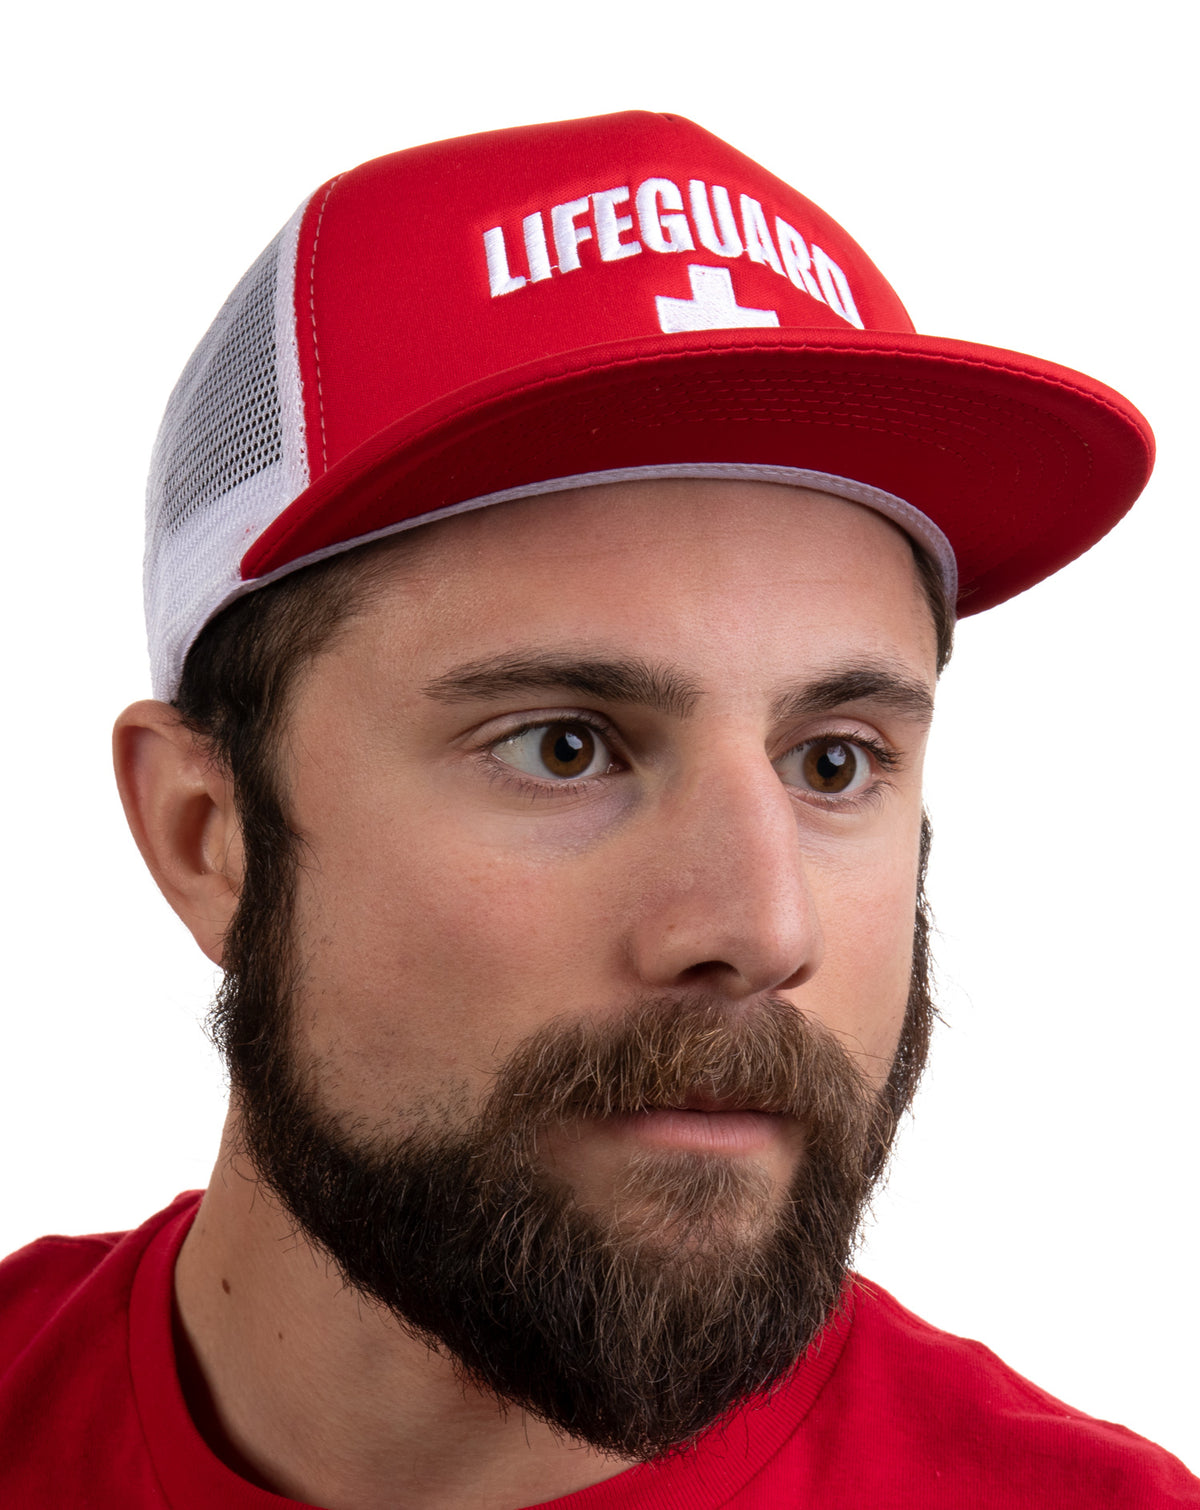 Lifeguard Snapback Hat | Flat Brim Guard Red Baseball Cap Men Women Cool Uniform